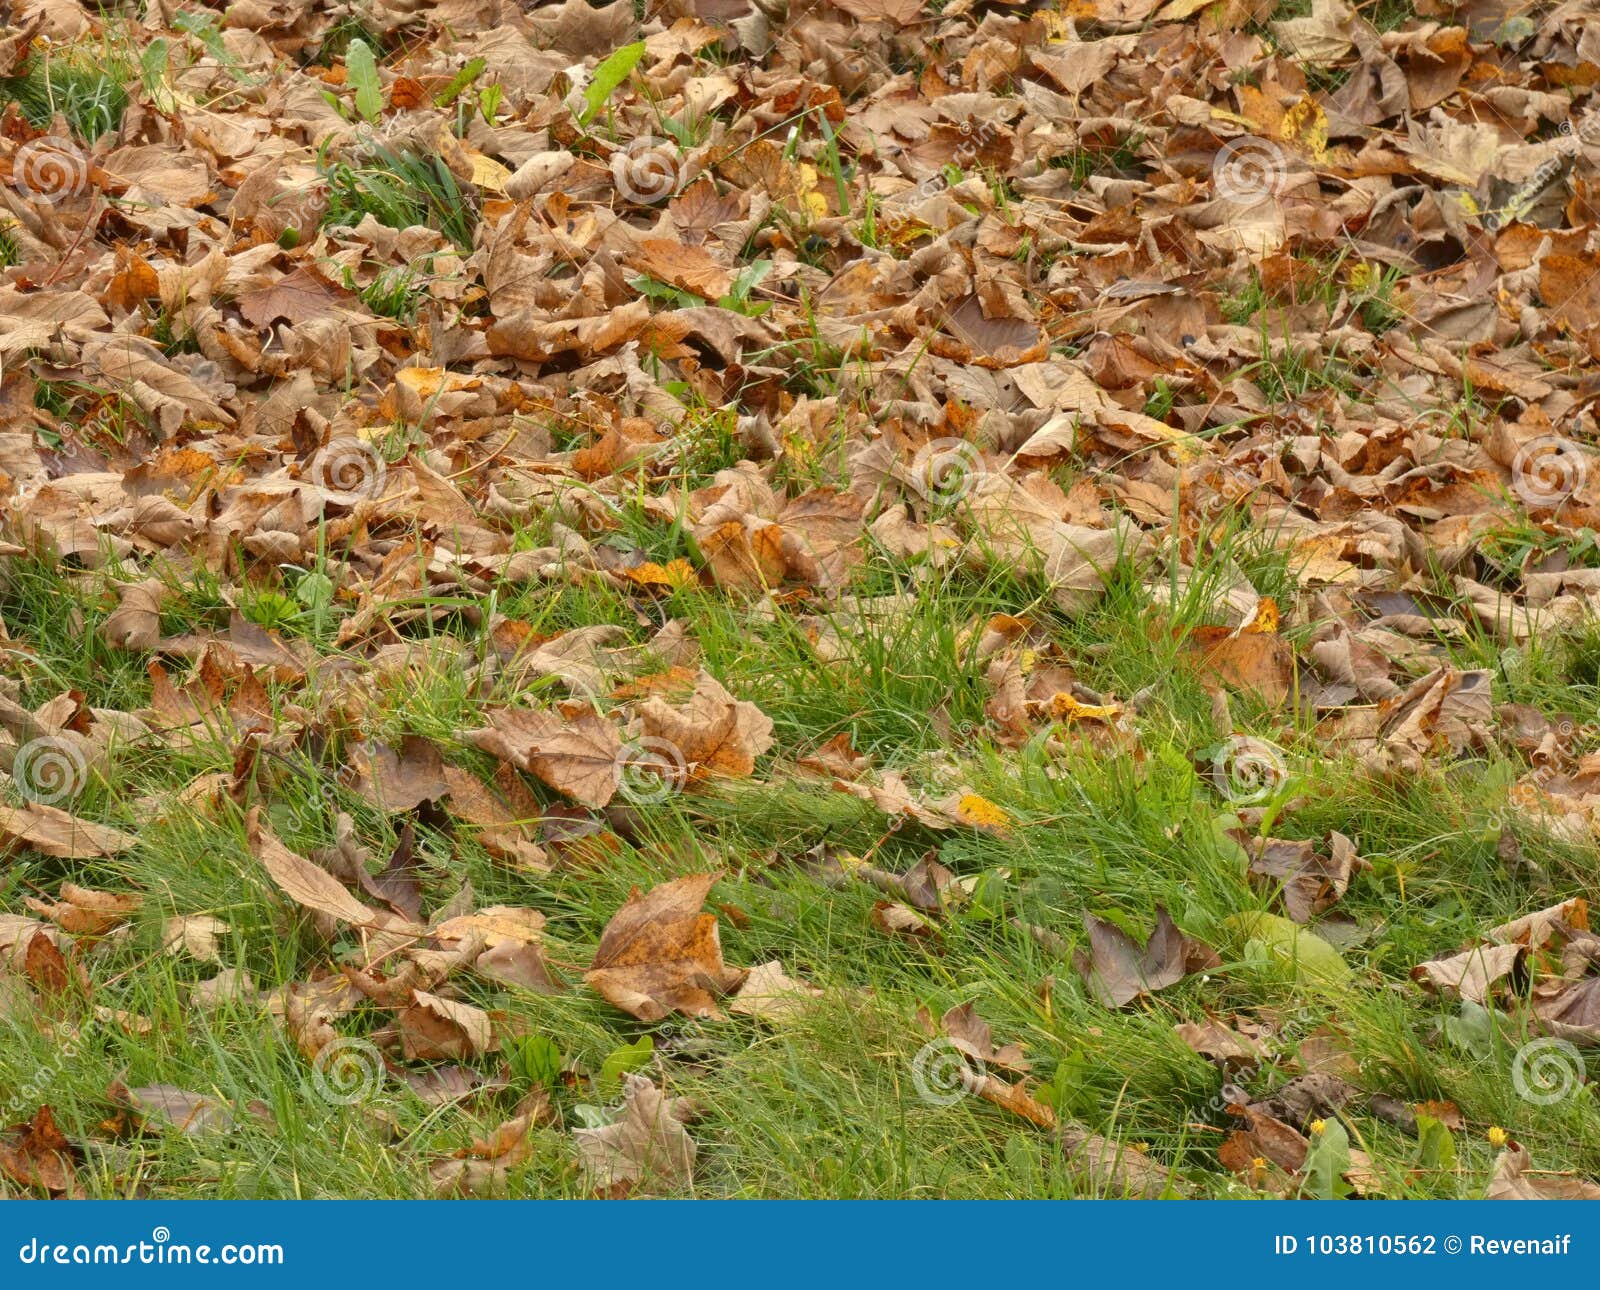 autumn leafage foliage - fallen leaves on the lawn fall